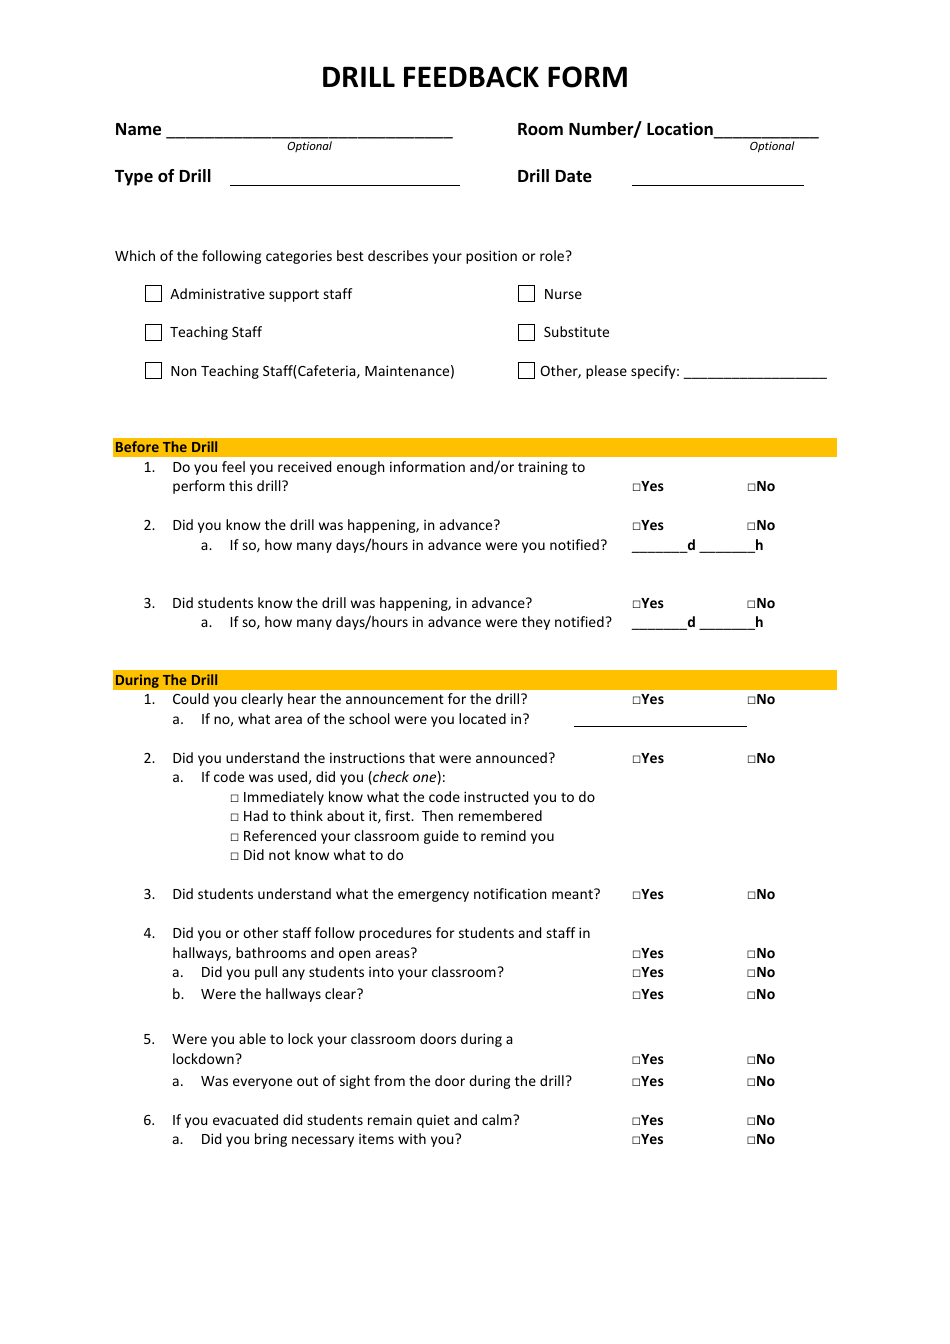 Drill Feedback Form, Page 1